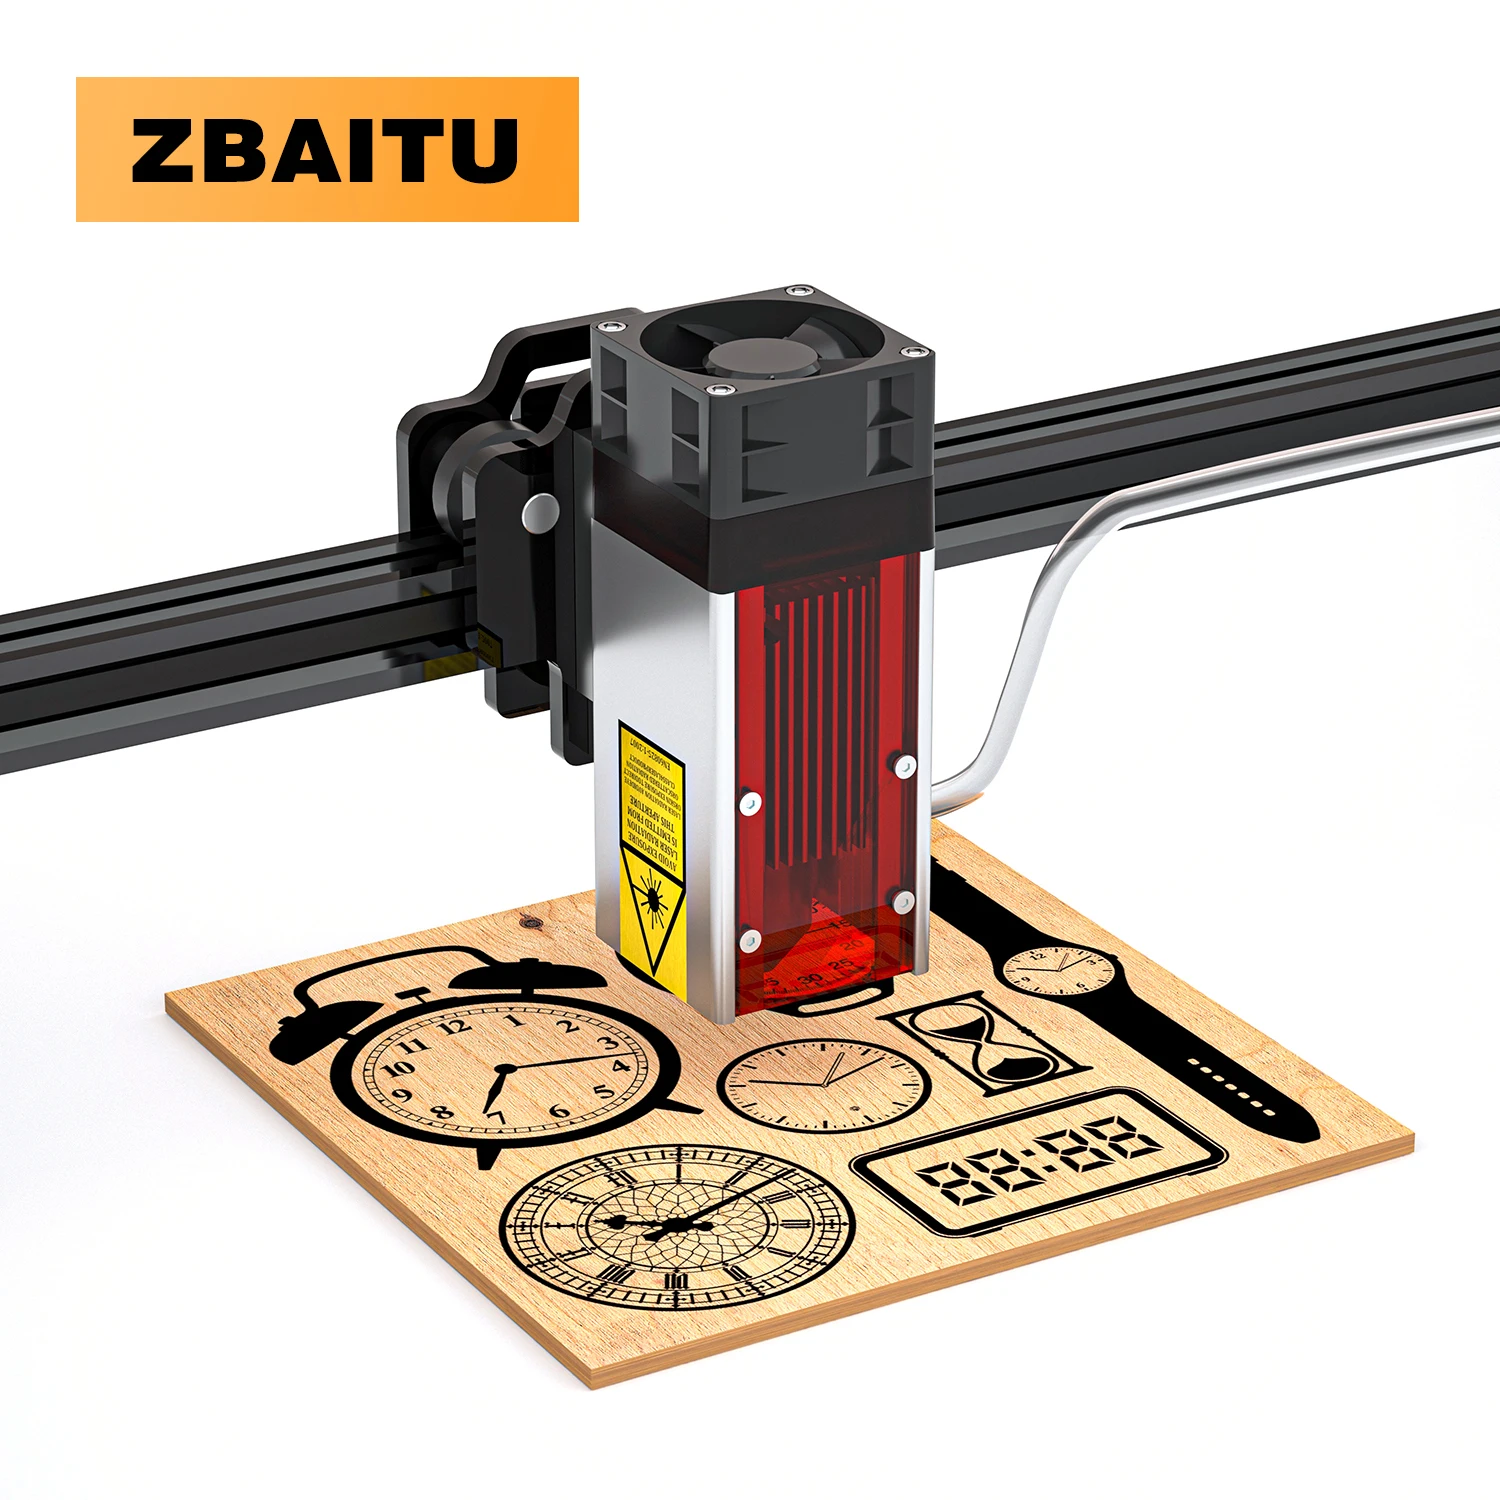 ZBAITU Laser Module Laser Head, C80 Professional Cutting Module, Cutting 5mm Plywood One Pass, With Regulator, Wood Tools CNC